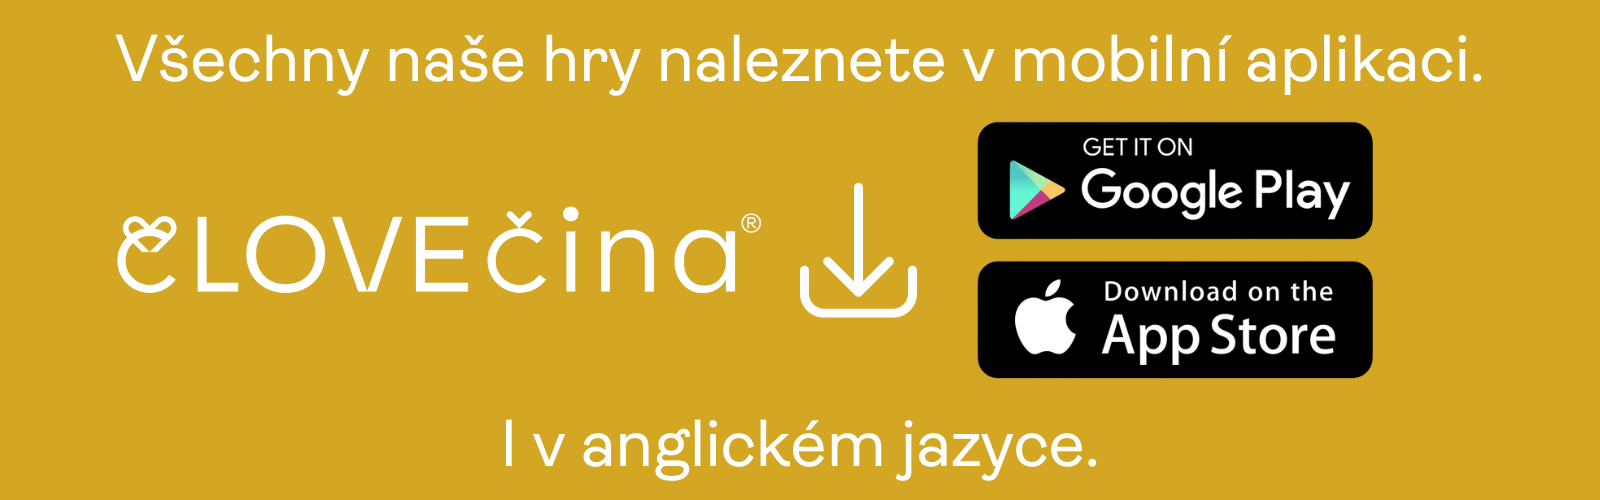 mobilni_aplikace_clovecina